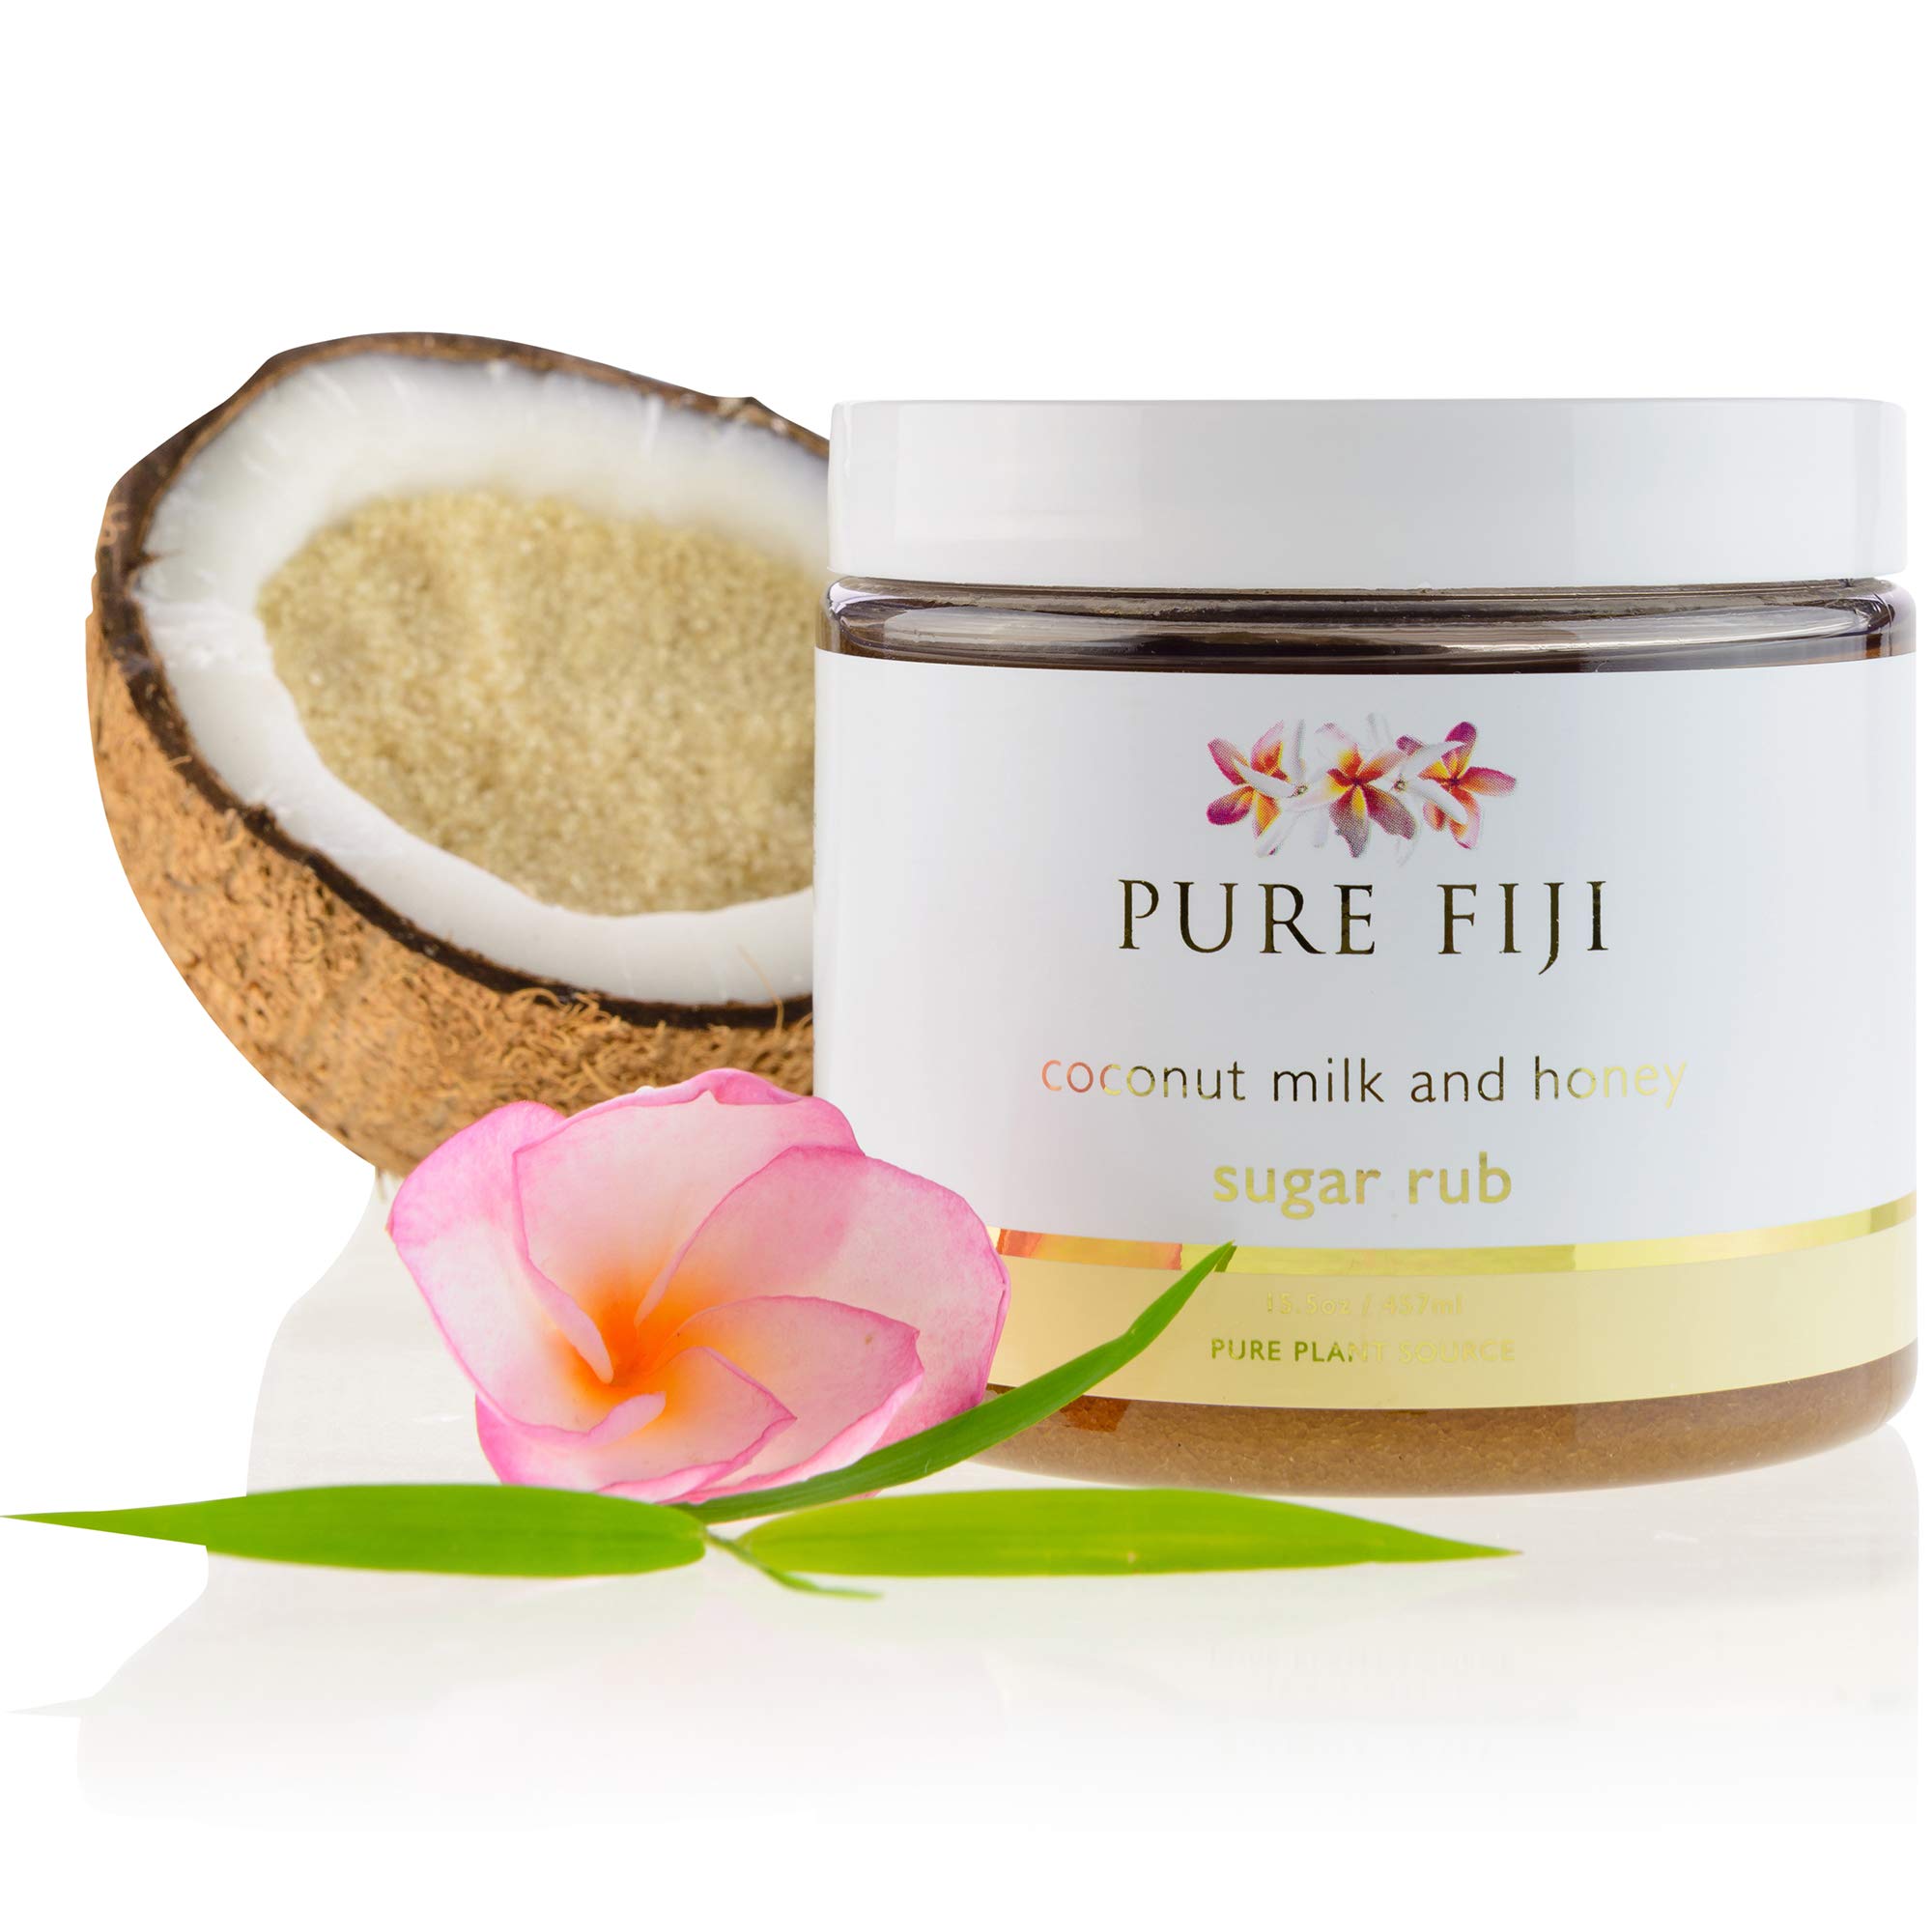 Pure Fiji Coconut Sugar Rub - Coconut Body Scrub Natural Origin for Smooths and Softens Skin - Organic Exfoliating Sugar Scrub for Body, Coconut Mi...